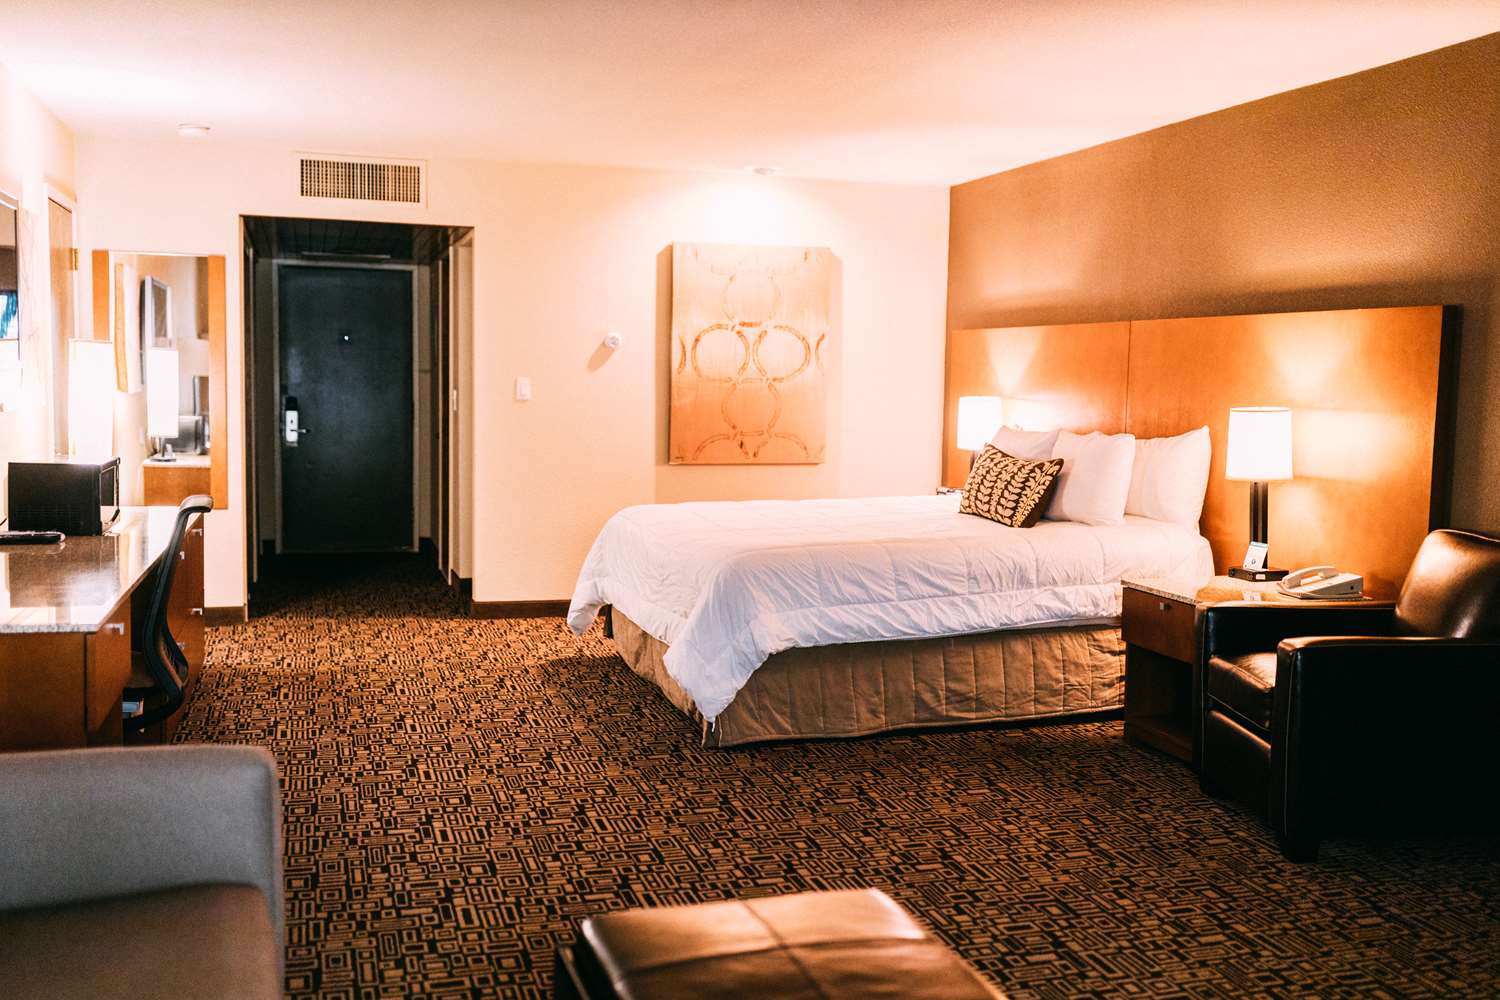 Bellagio Las Vegas - The Resort Room with Double Queen Beds (Caramel) at  the Bellagio Las Vegas